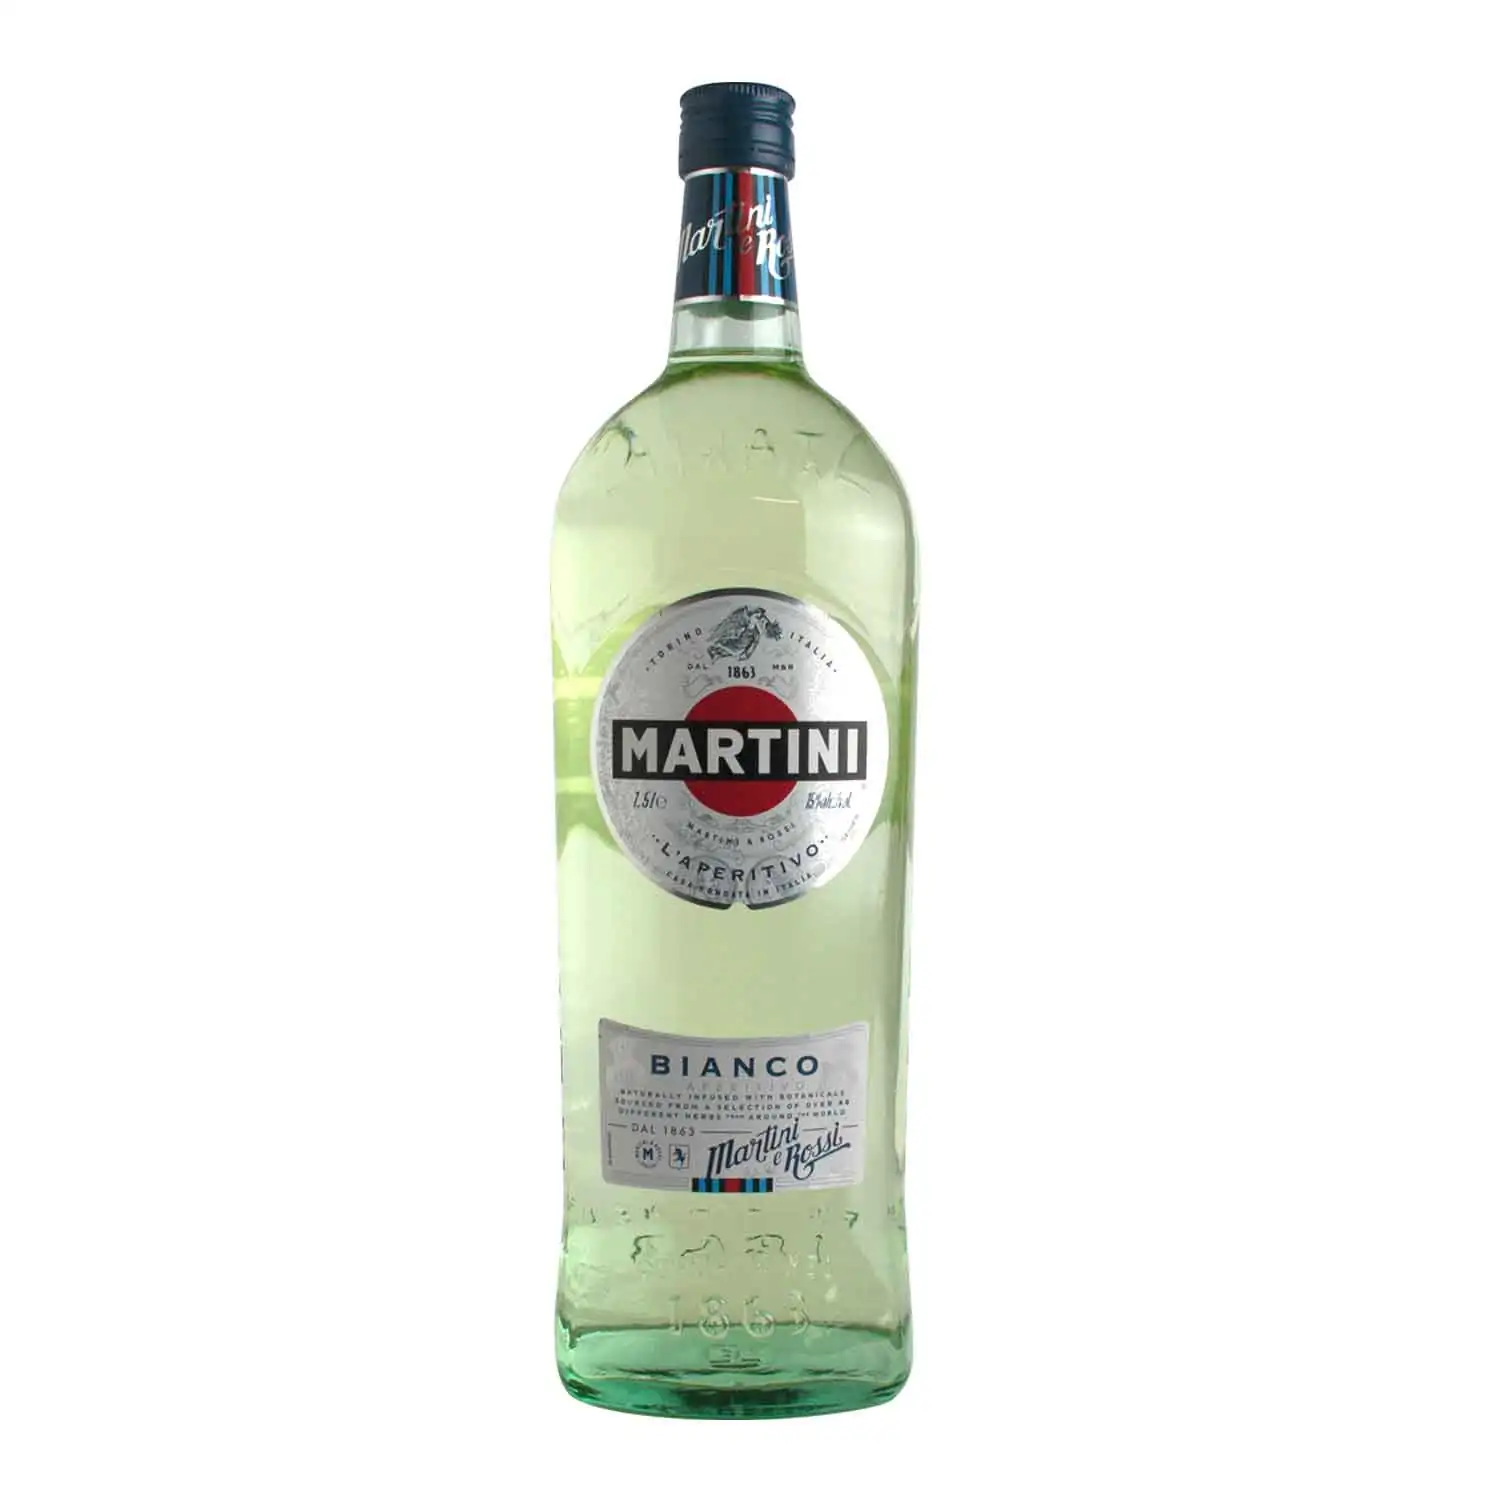 Martini bianco 1,5l Alc 15% - Buy at Real Tobacco